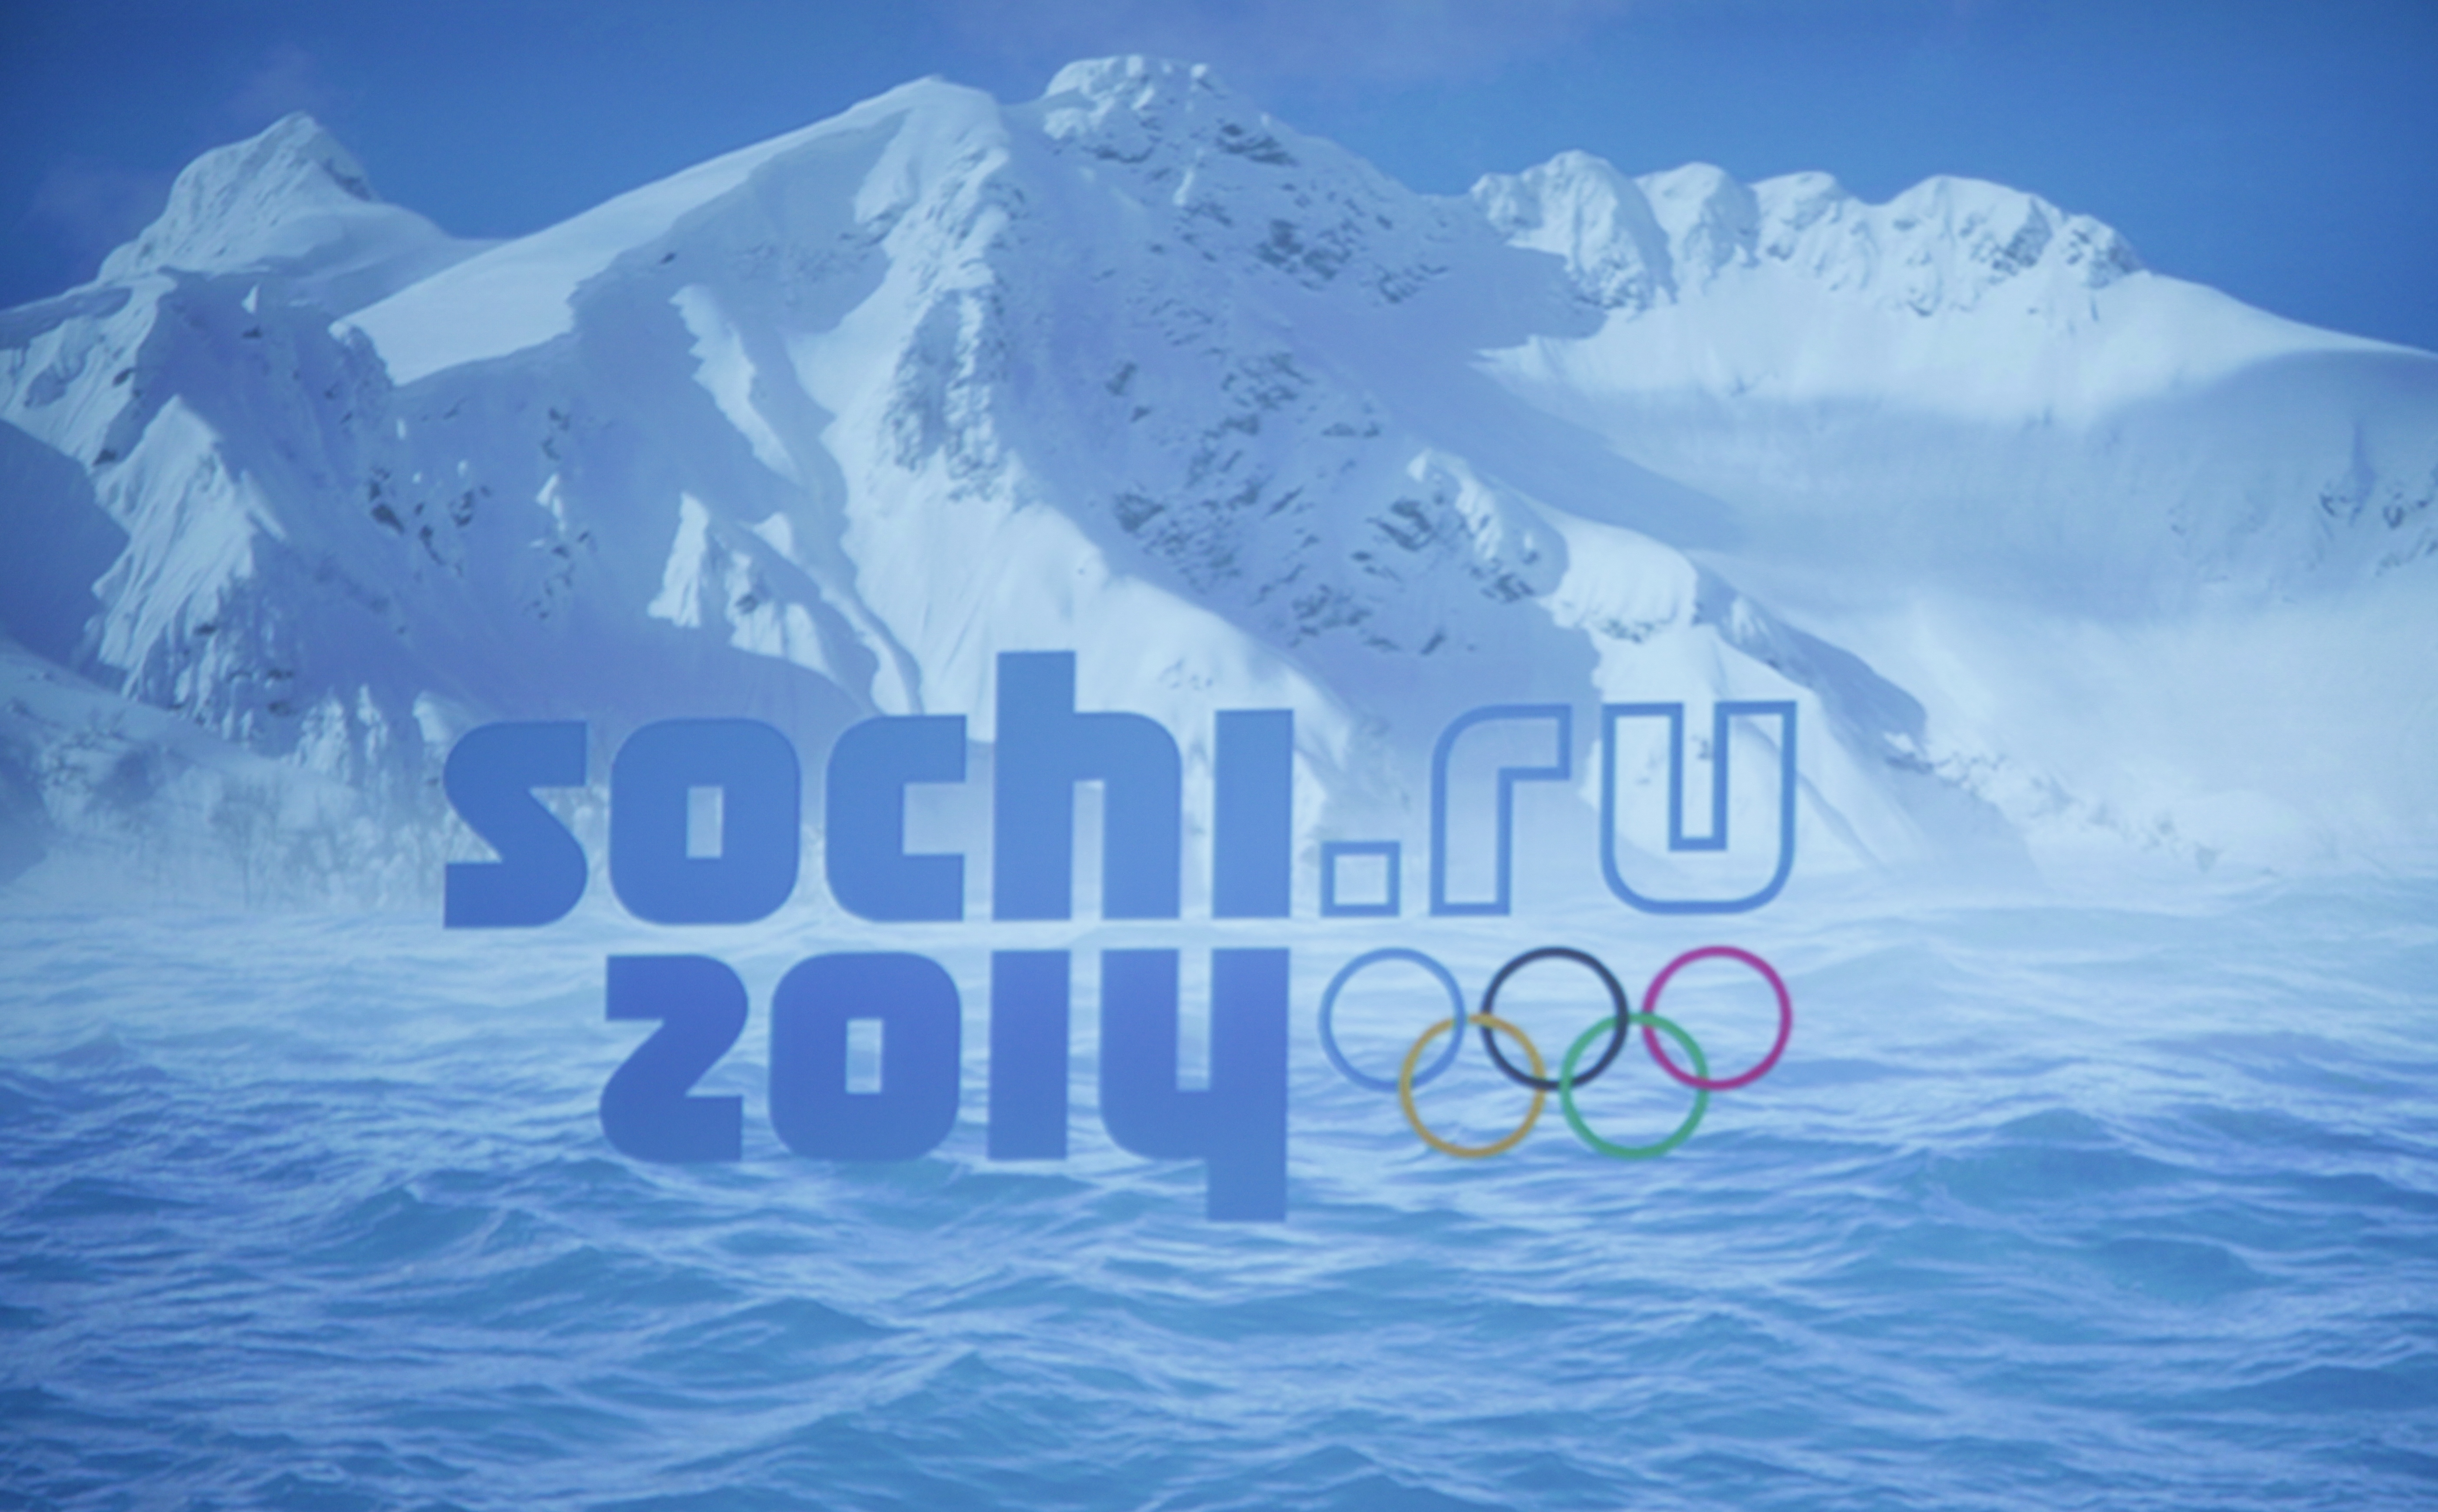 Логотипы 2014. Олимпийские игры в Сочи 2014. Логотип Олимпийских игр Сочи 2014. Зимние Олимпийские игры 2014 логотип. Олимпийский Сочи 2014 логотип.